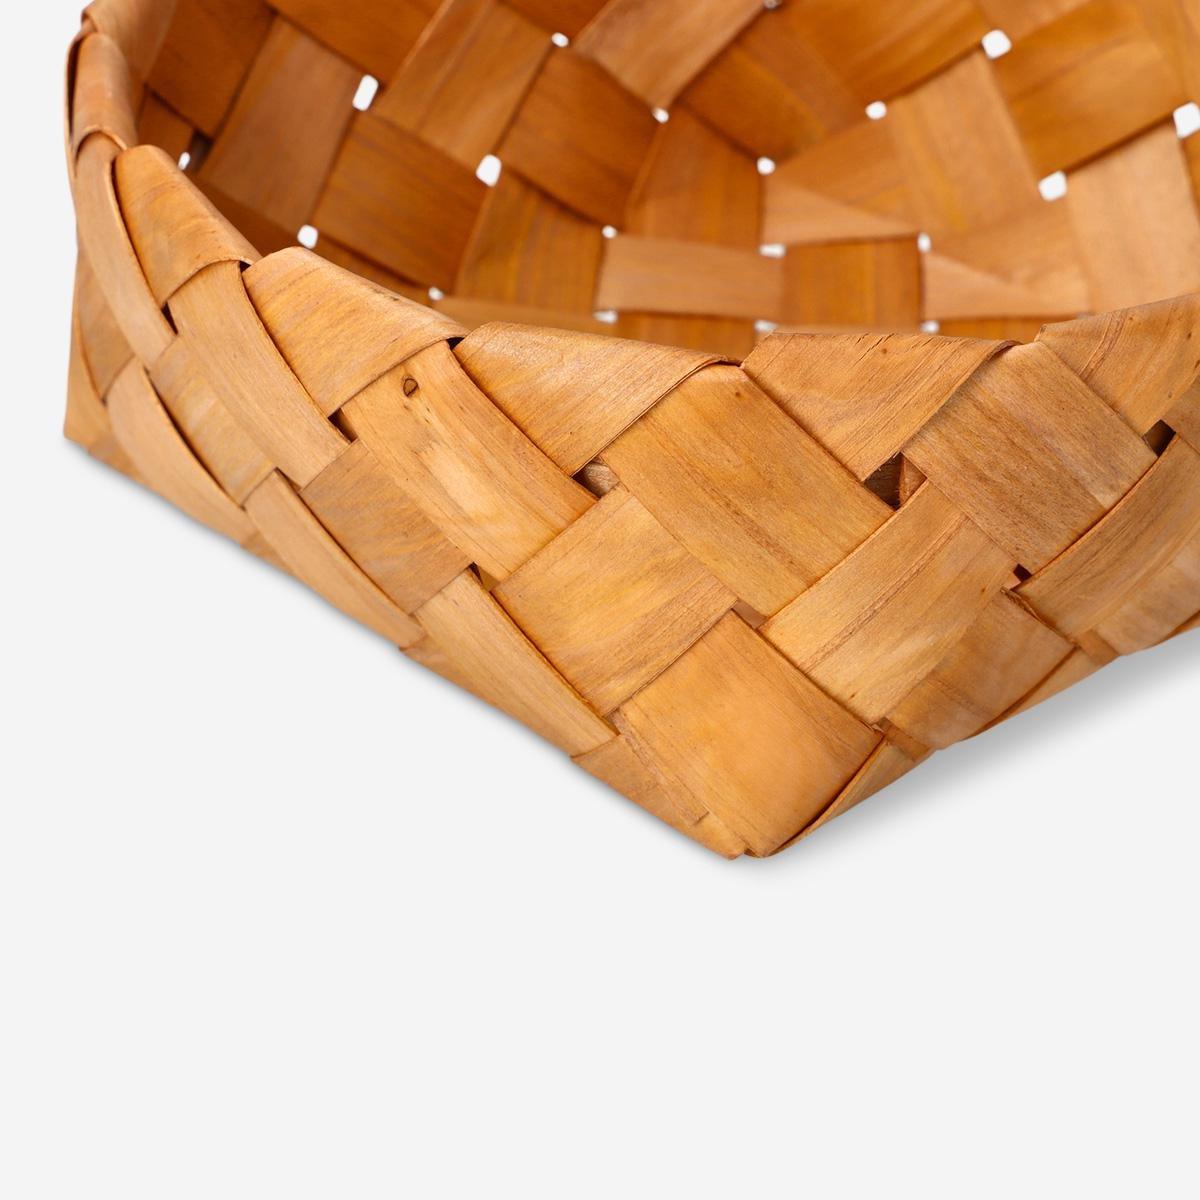 Brown bread basket